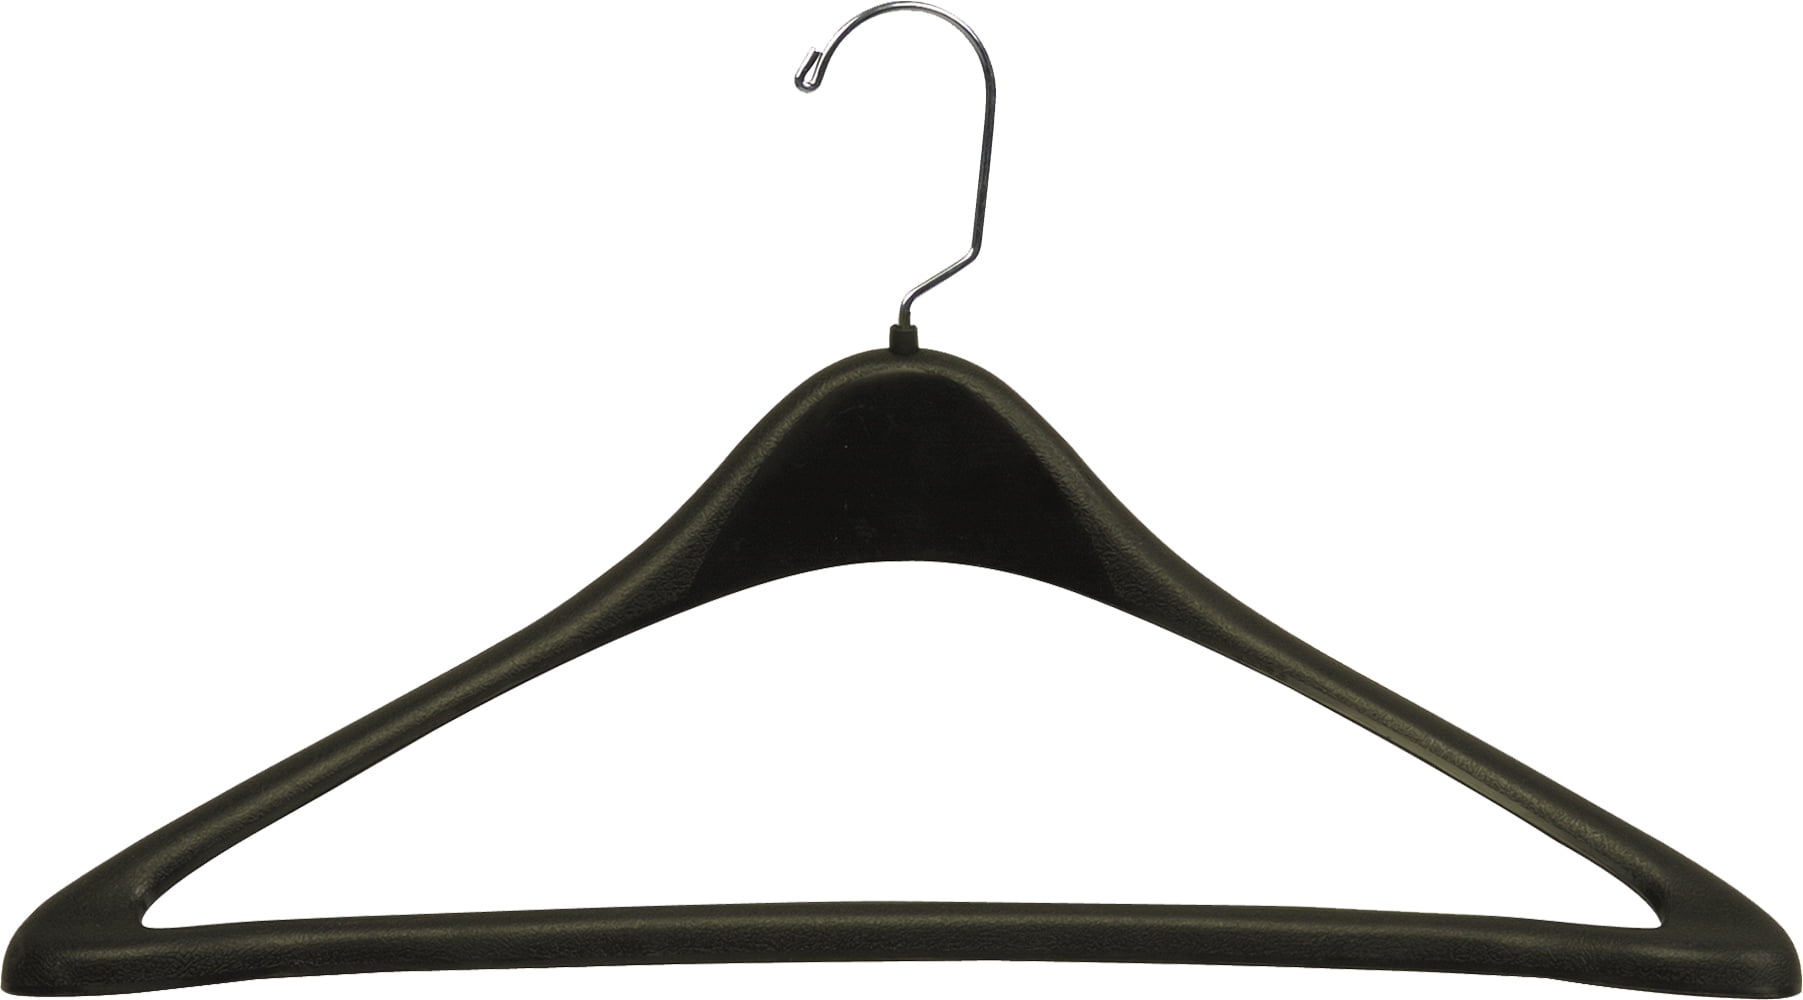 HOUSE DAY Black Plastic Hangers,50 Pack Plastic Clothes Hangers for Skirt Suit Coat Standard Clothing Hangers